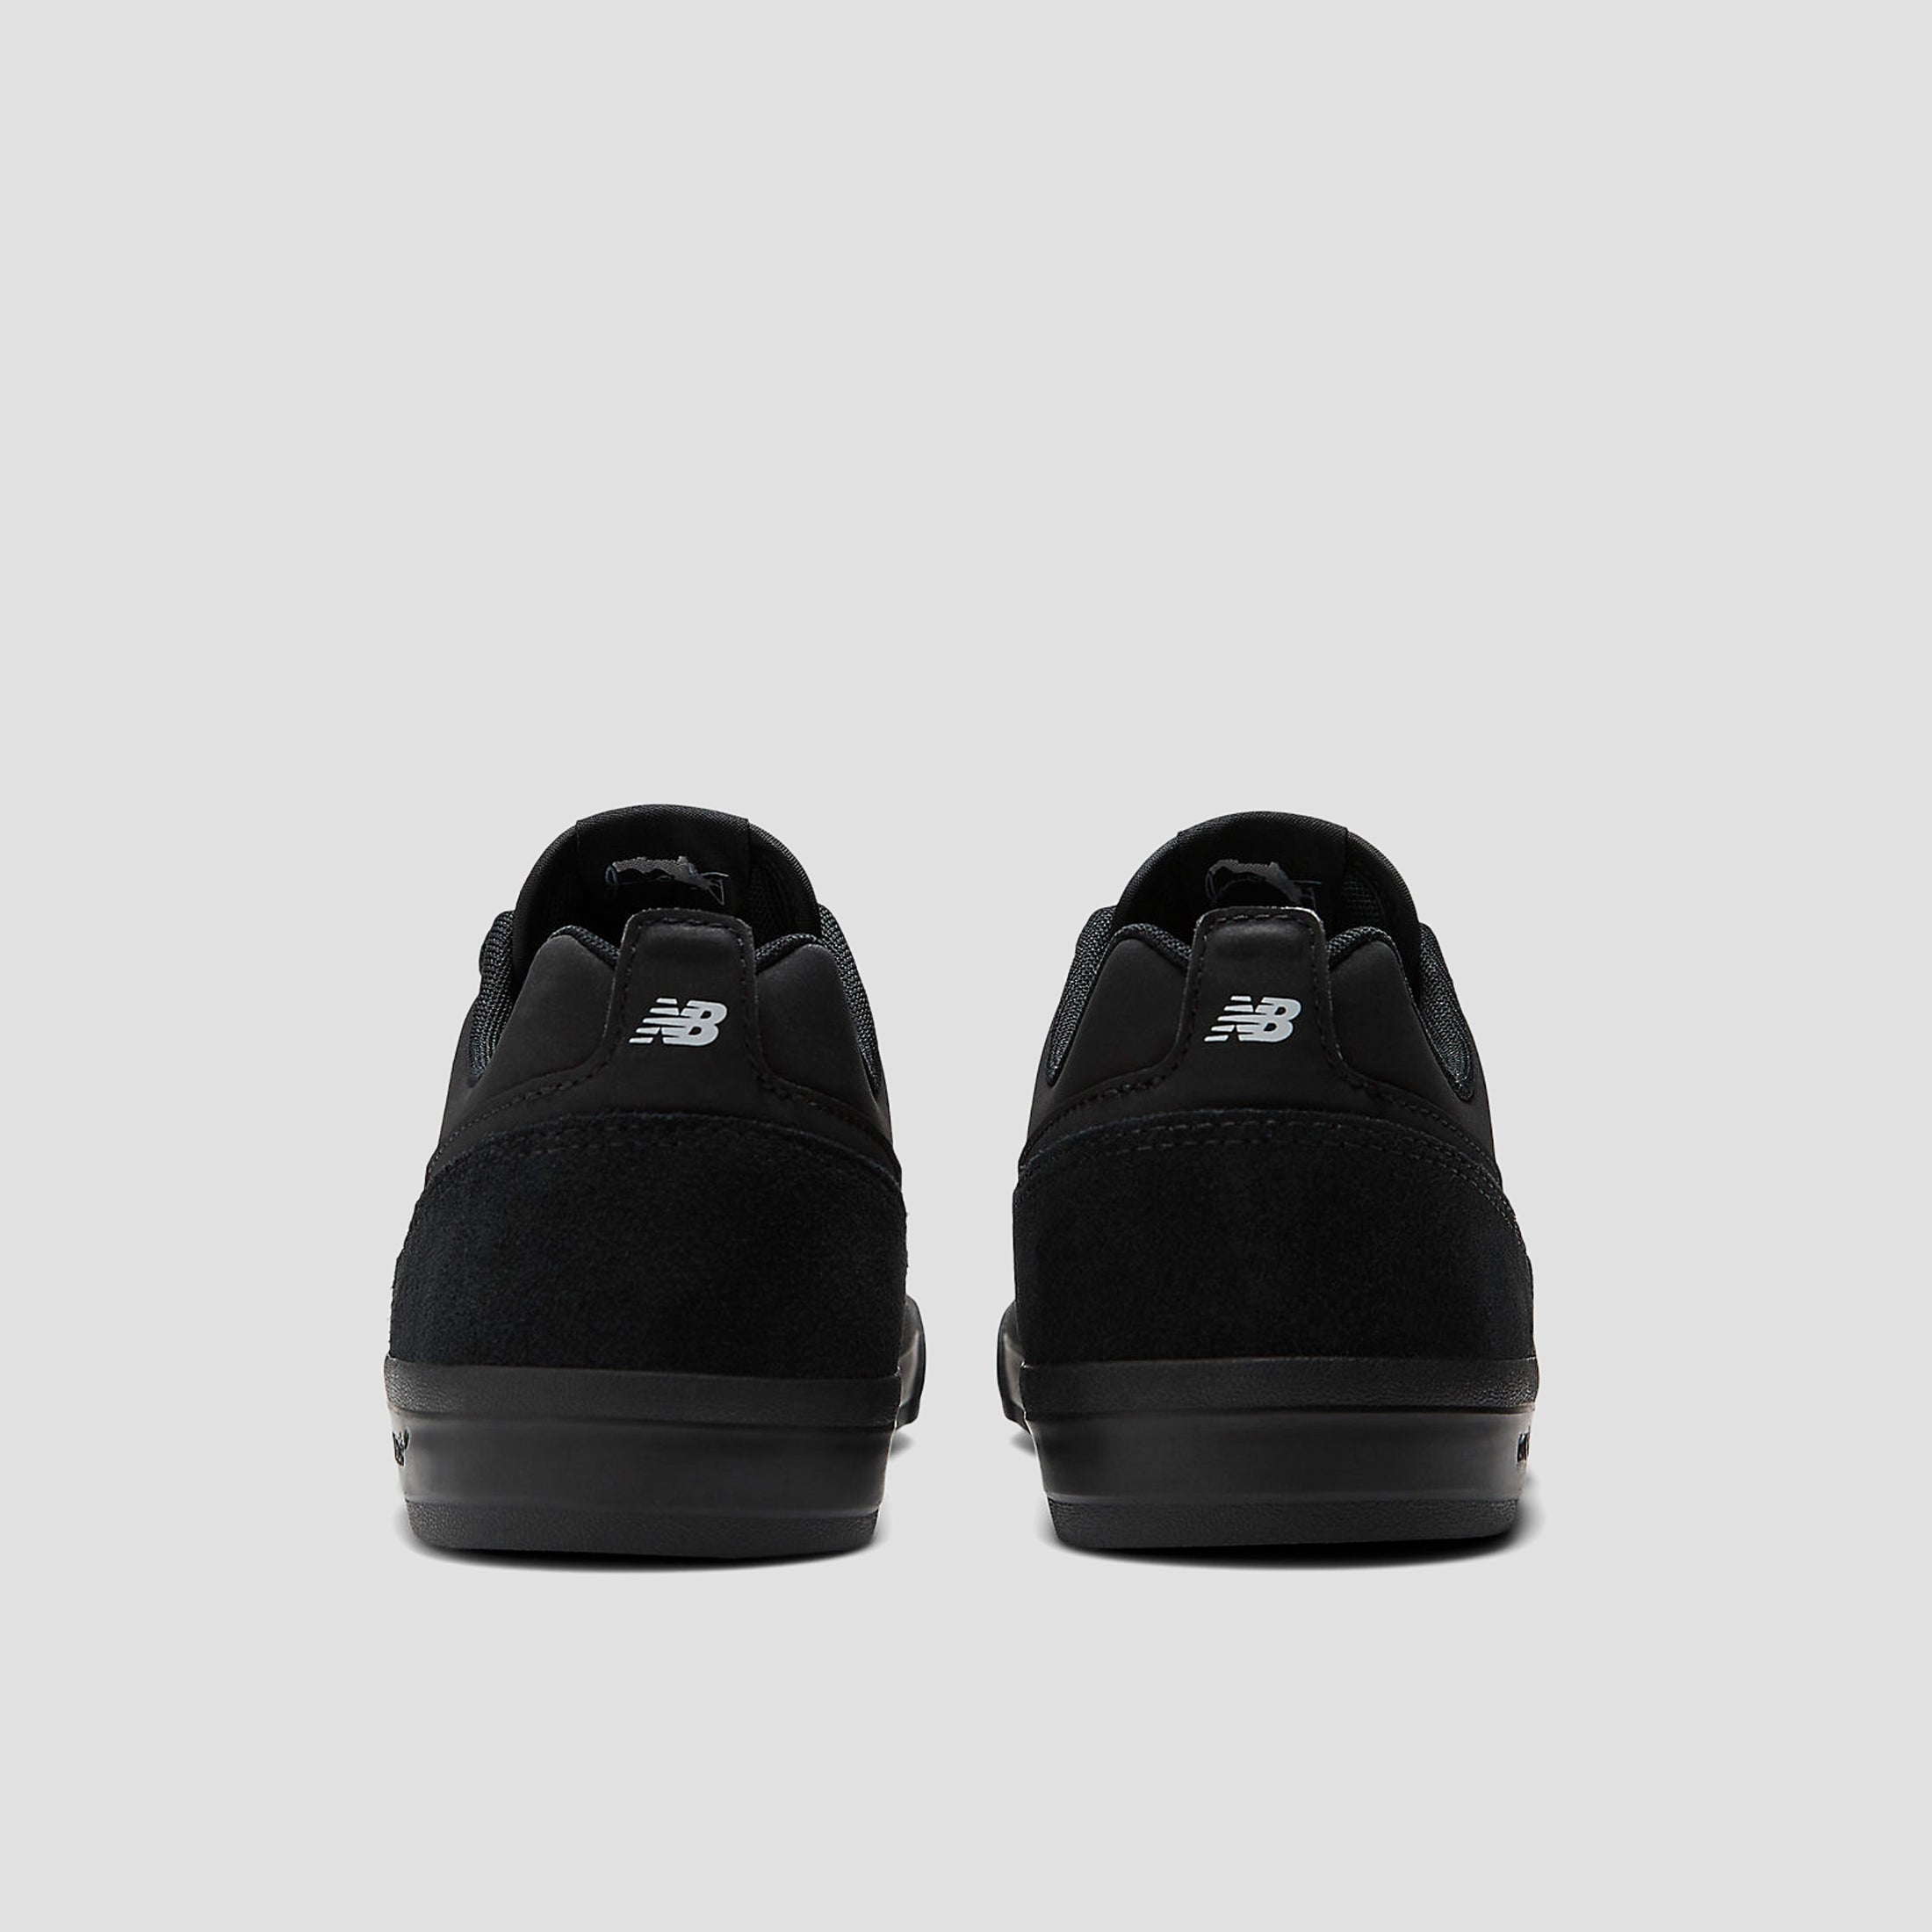 New Balance Jamie Foy 306 Skate Shoes Black / Black